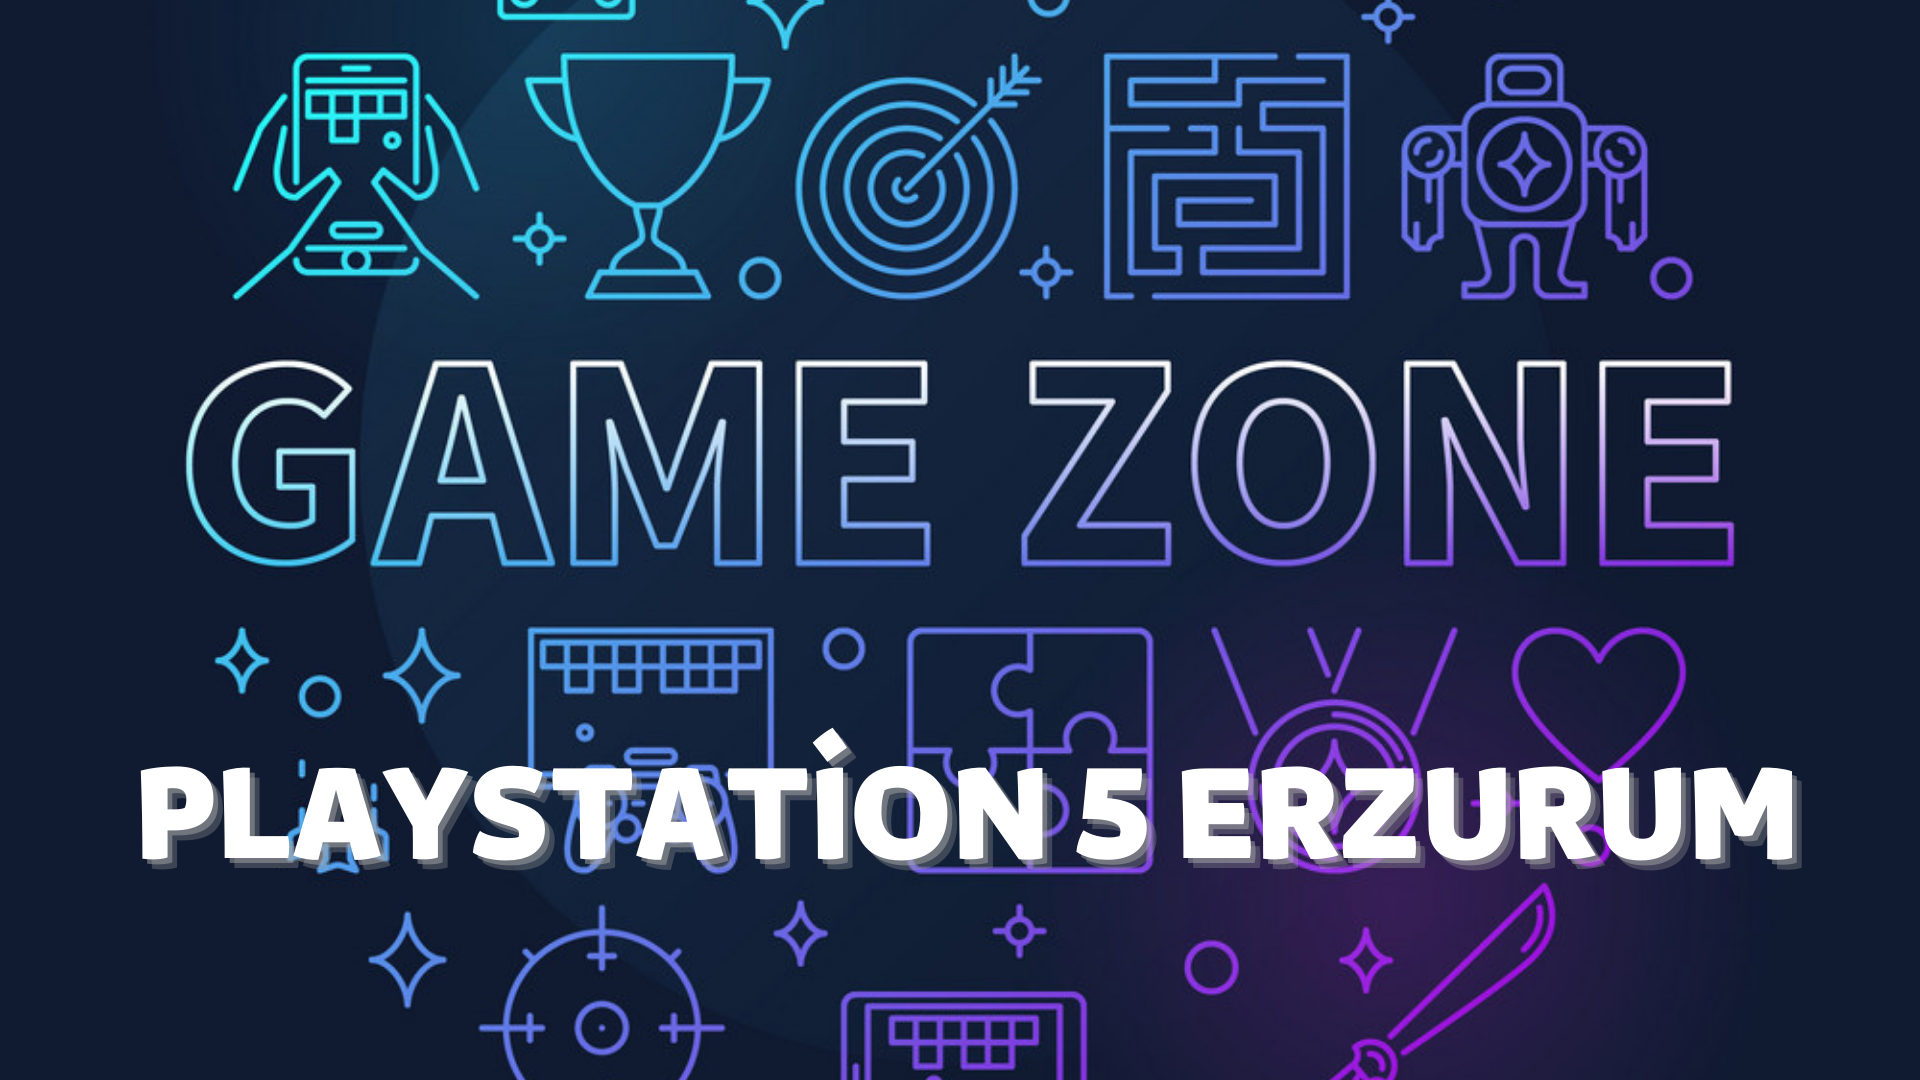 Playstation 5 Erzurum | GameZone Playstation